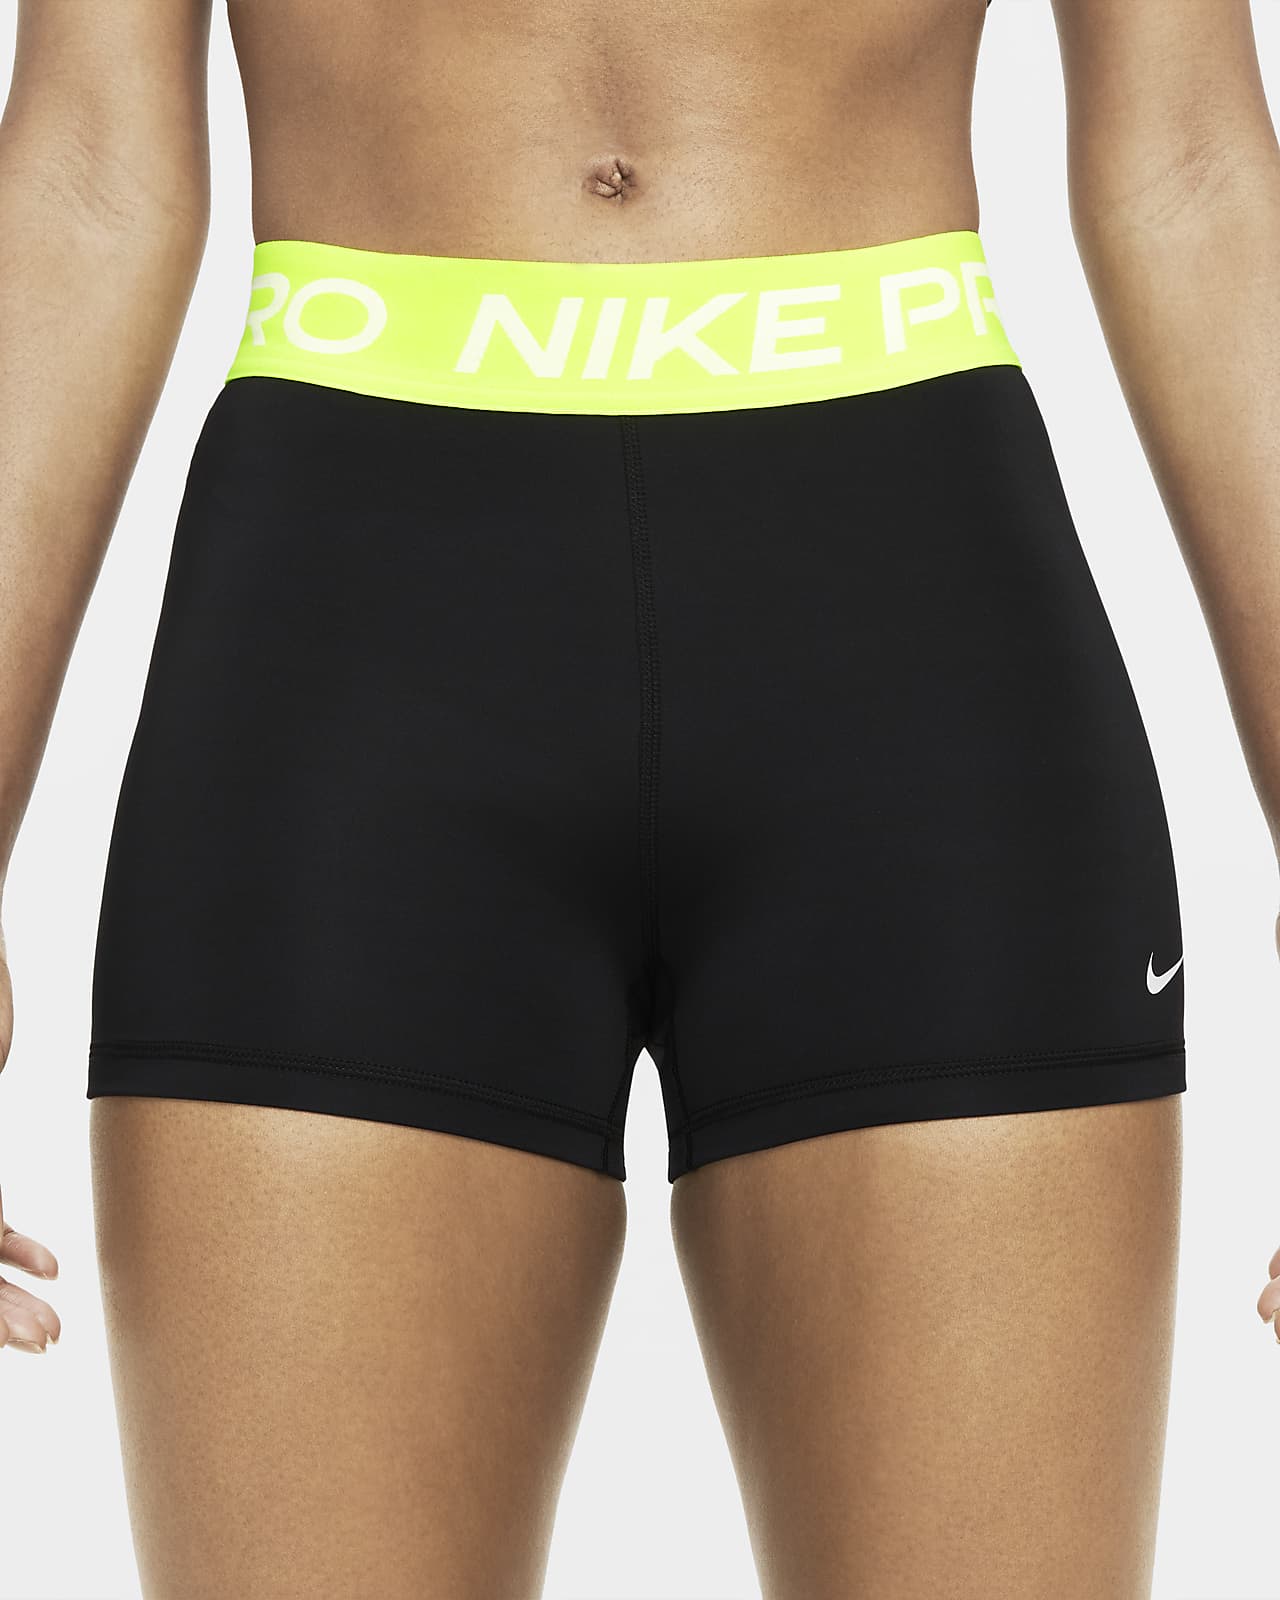 Nike Pro Shorts - Black